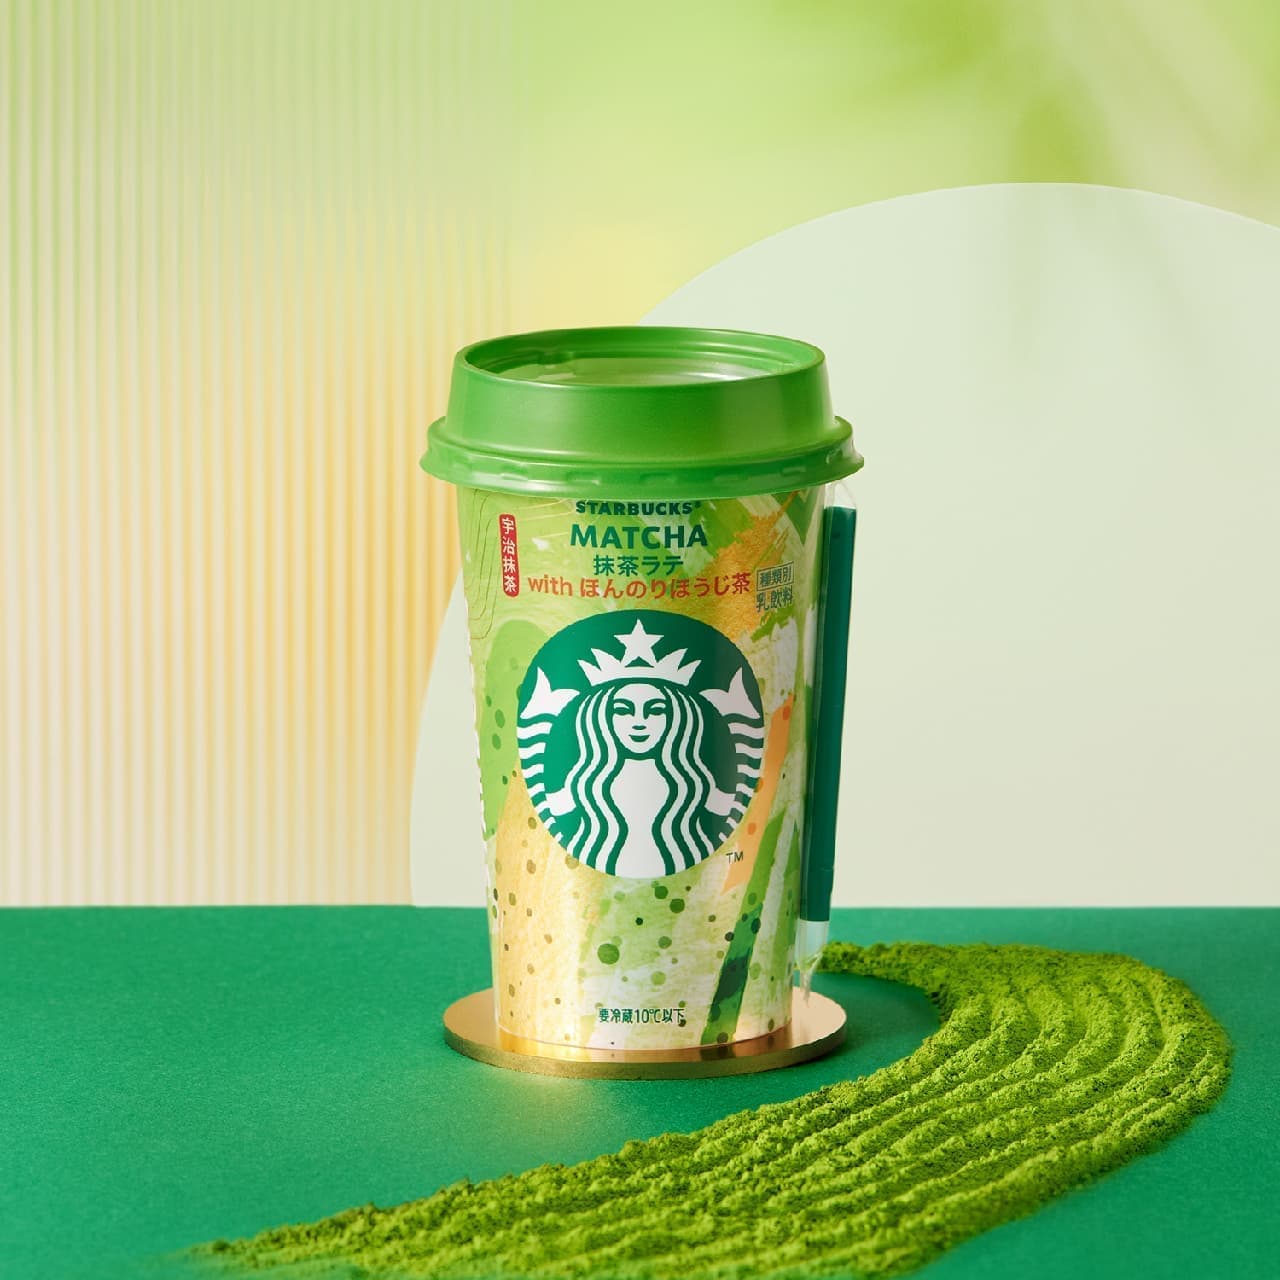 Starbucks Chilled Cup "Starbucks Green Tea Latte with Slightly Hojicha".